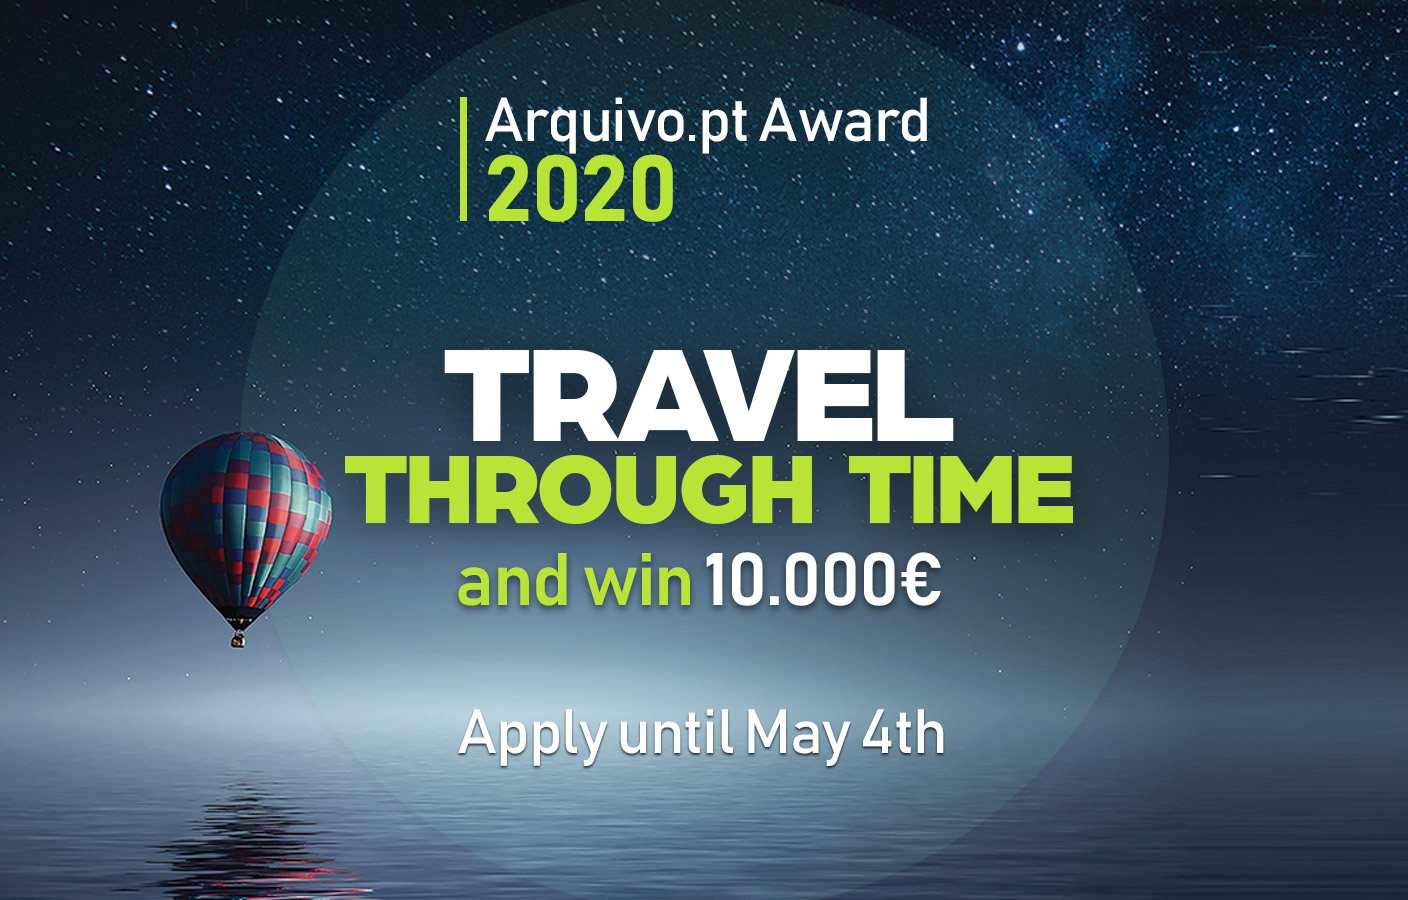 Arquivo.pt Award 2020